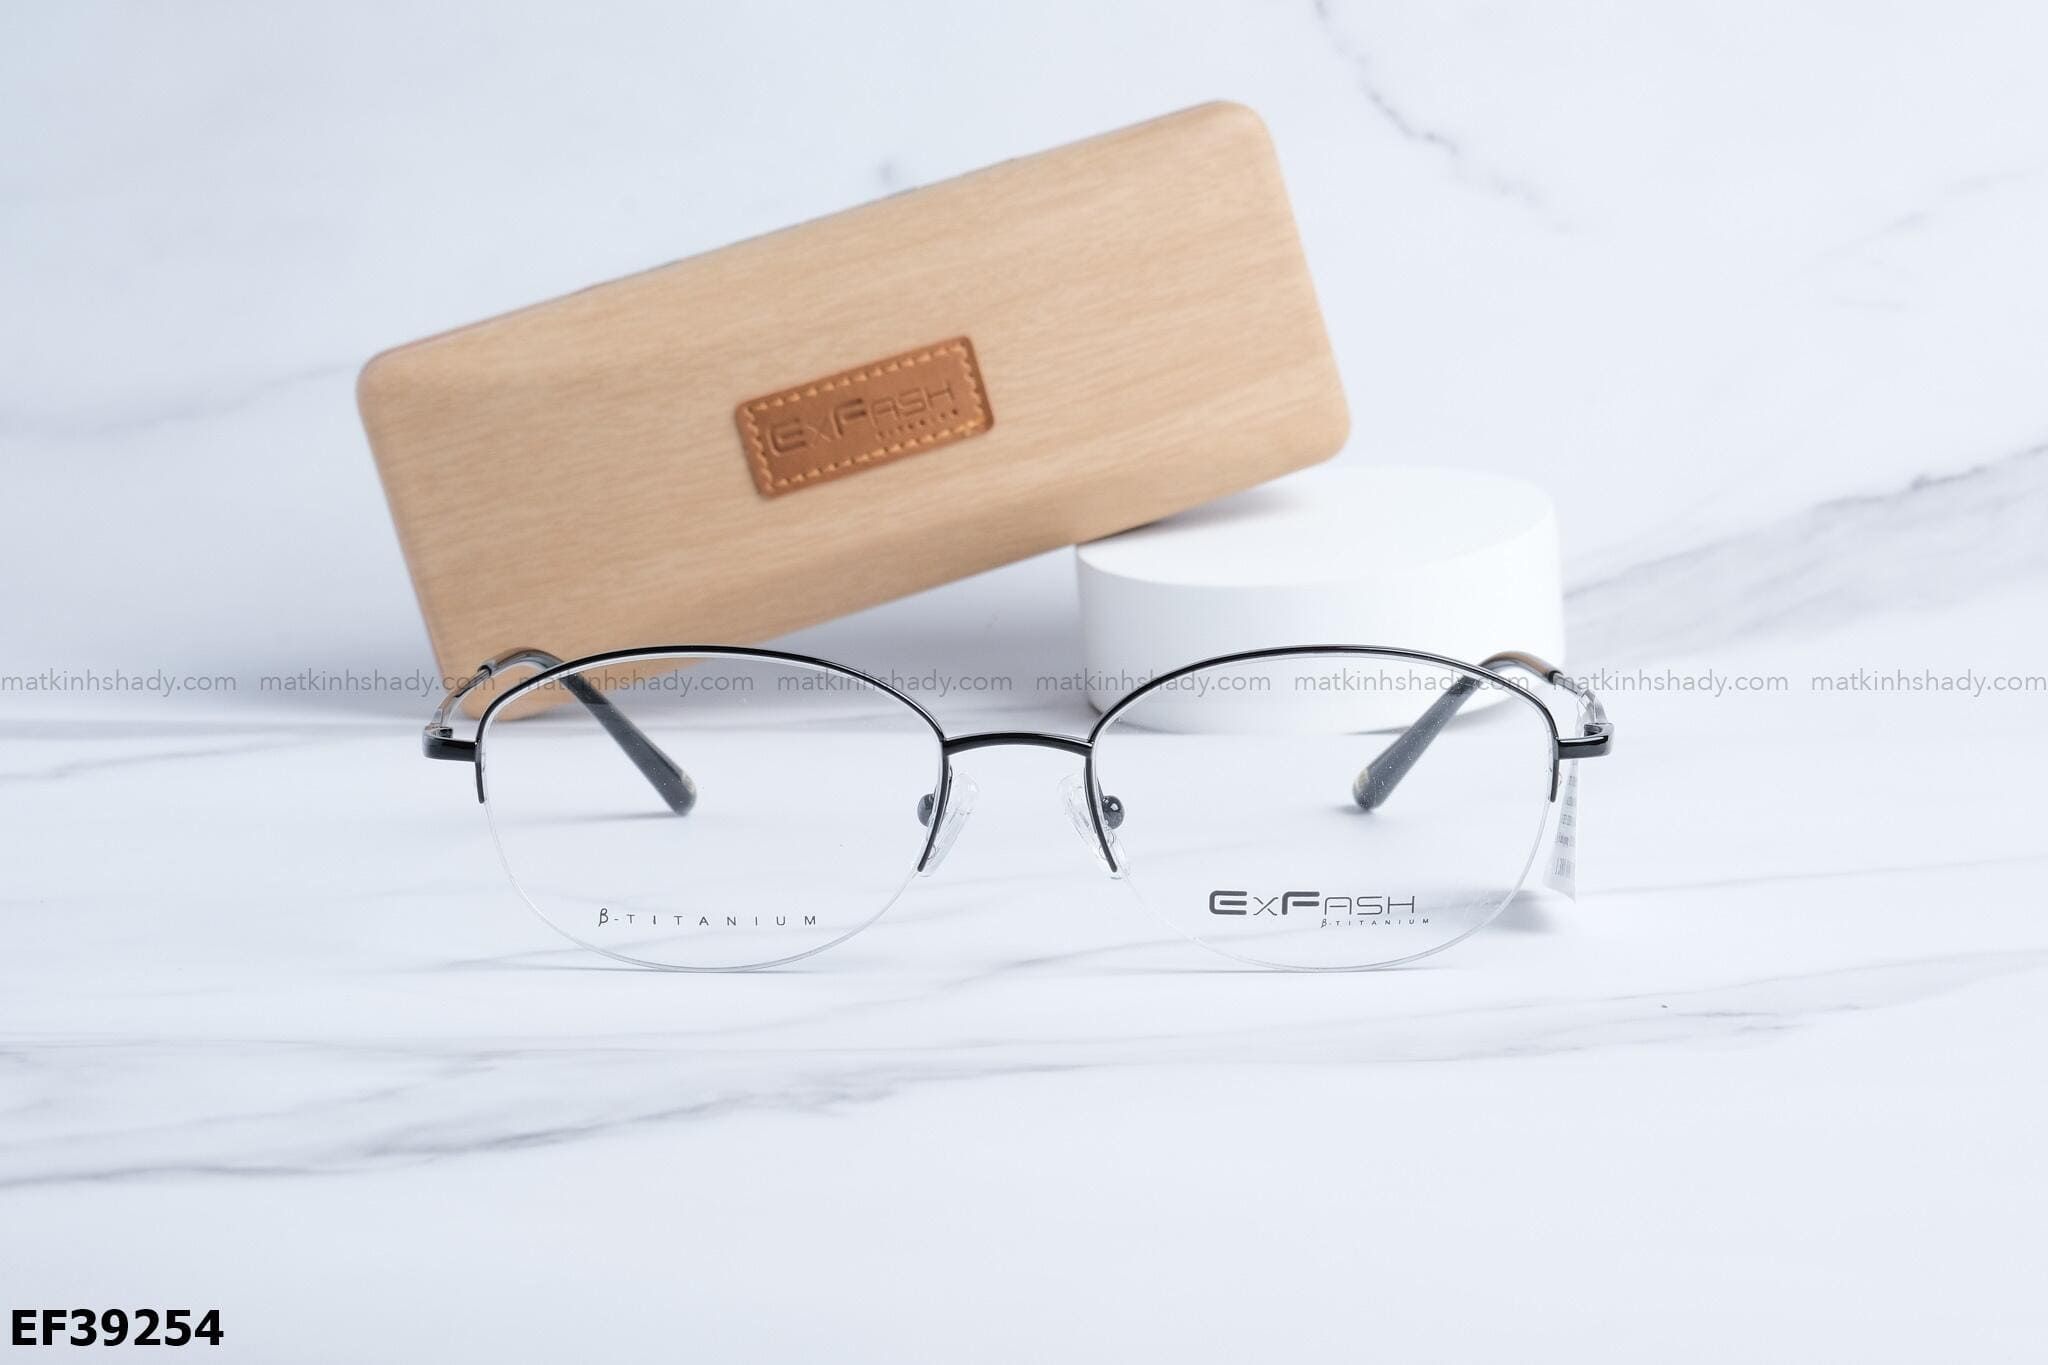  Exfash Eyewear - Glasses - EF39254 